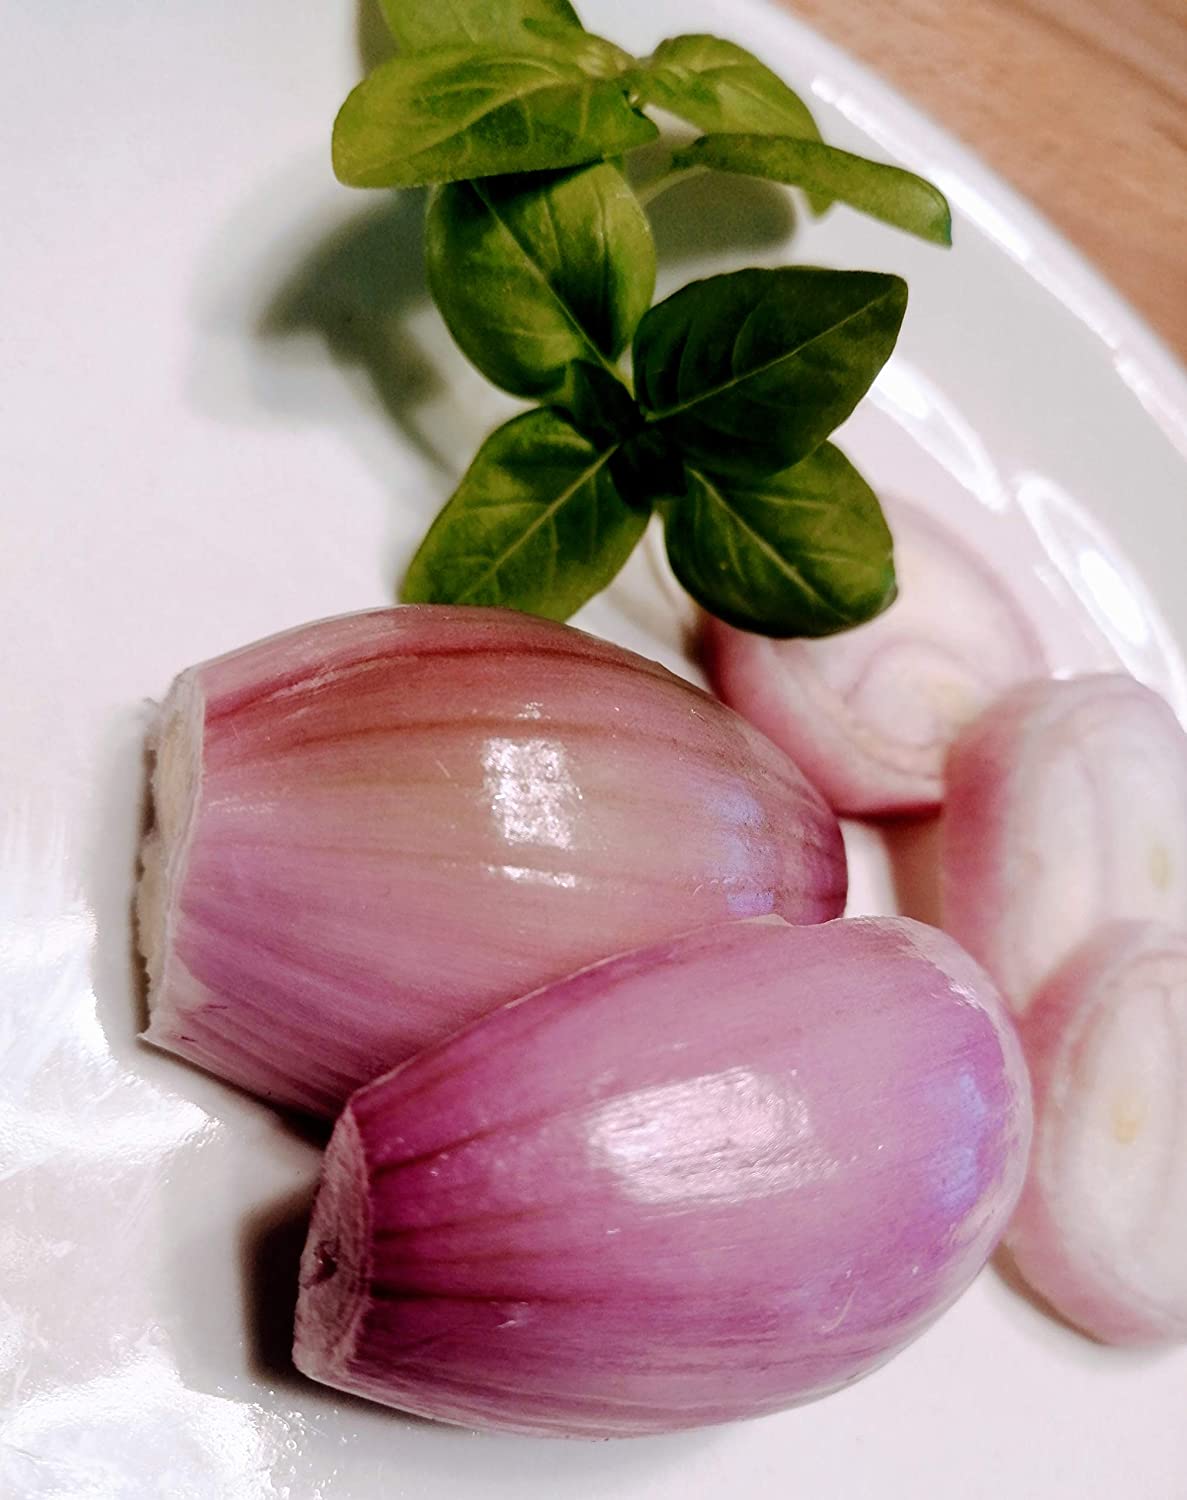 Hundredfold Italian Heirloom Torpedo Red Onion 100 Vegetable Seeds - Allium cepa, Non-GMO Rossa Lunga di Tropea, Sweet and Mild Taste